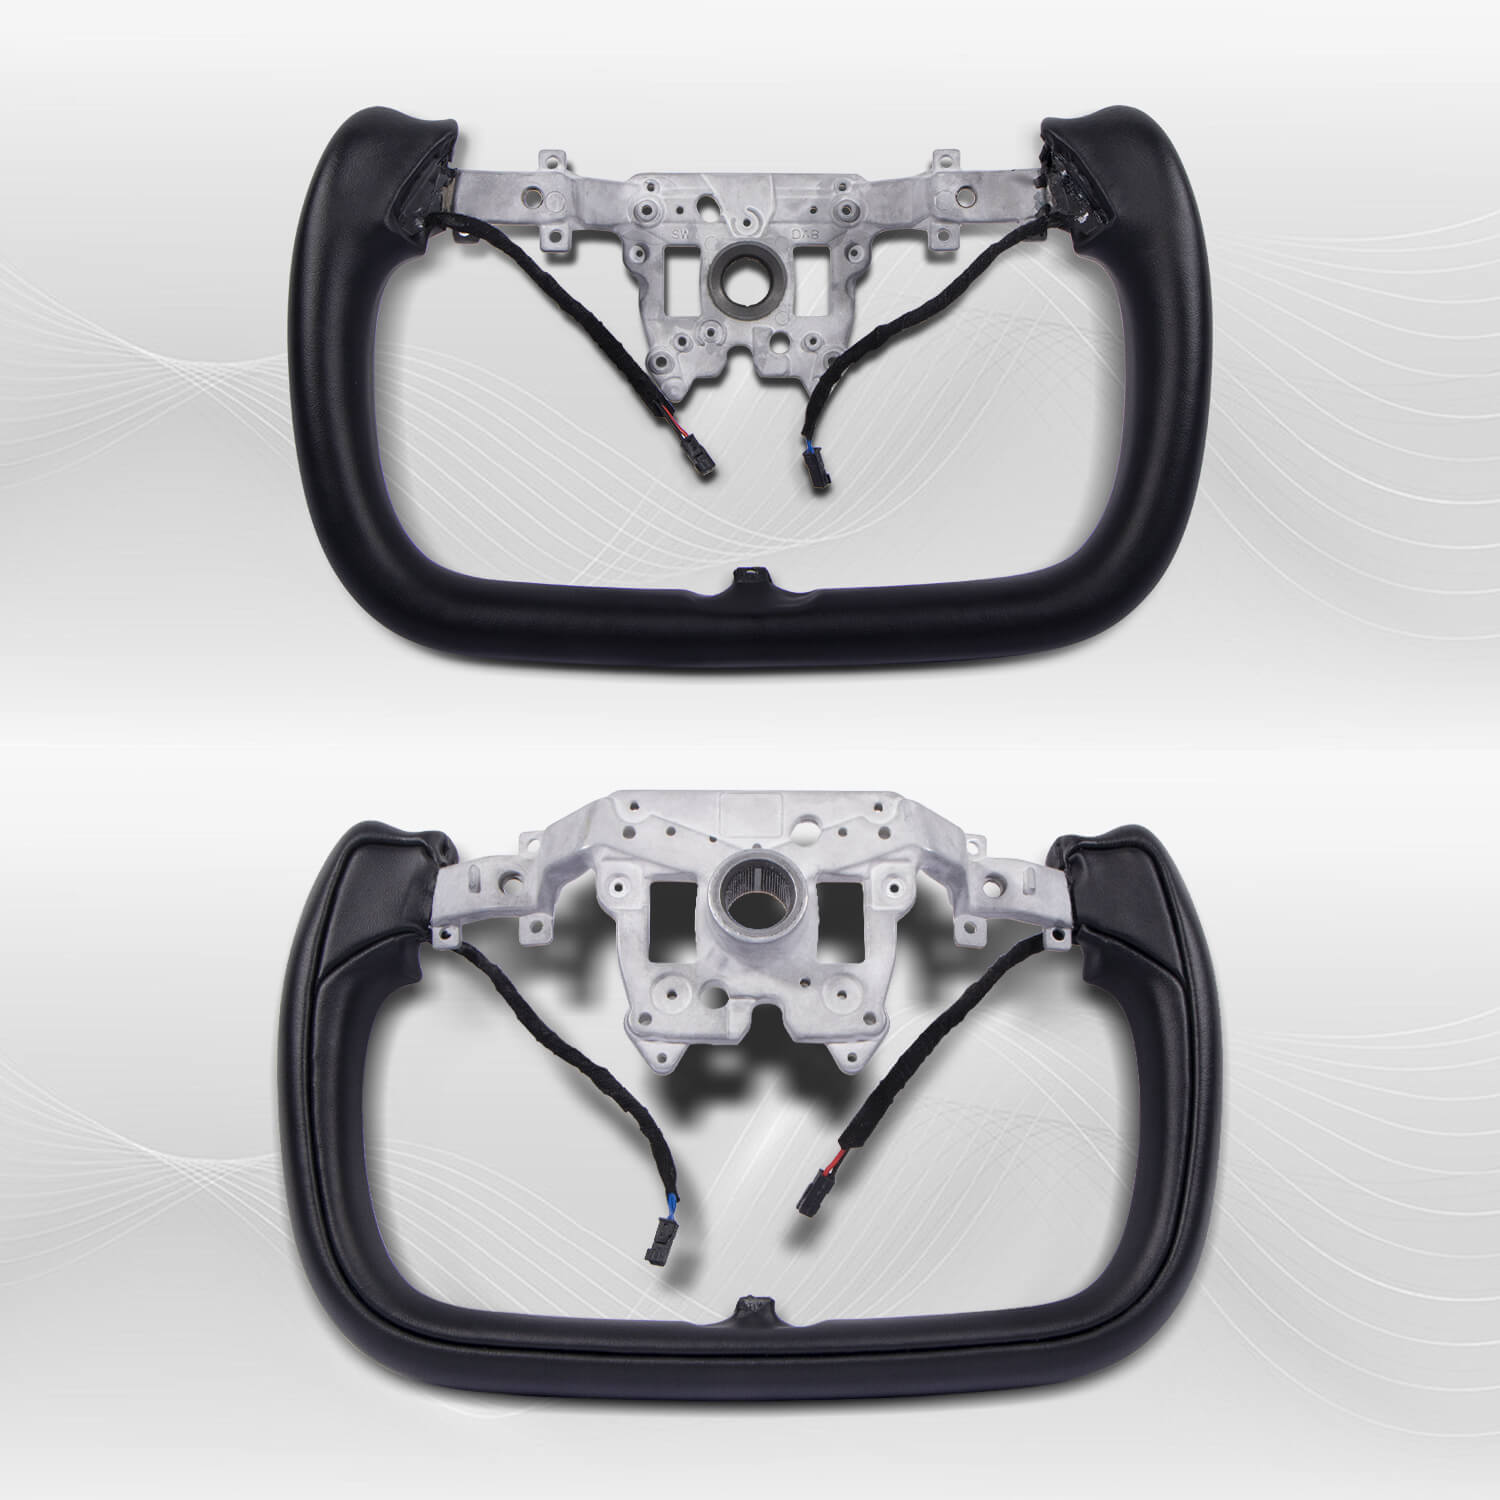 Hansshow Yoke Nappa Leather Steering Wheel For Tesla Model 3 Highland - Advanced & Luxurious